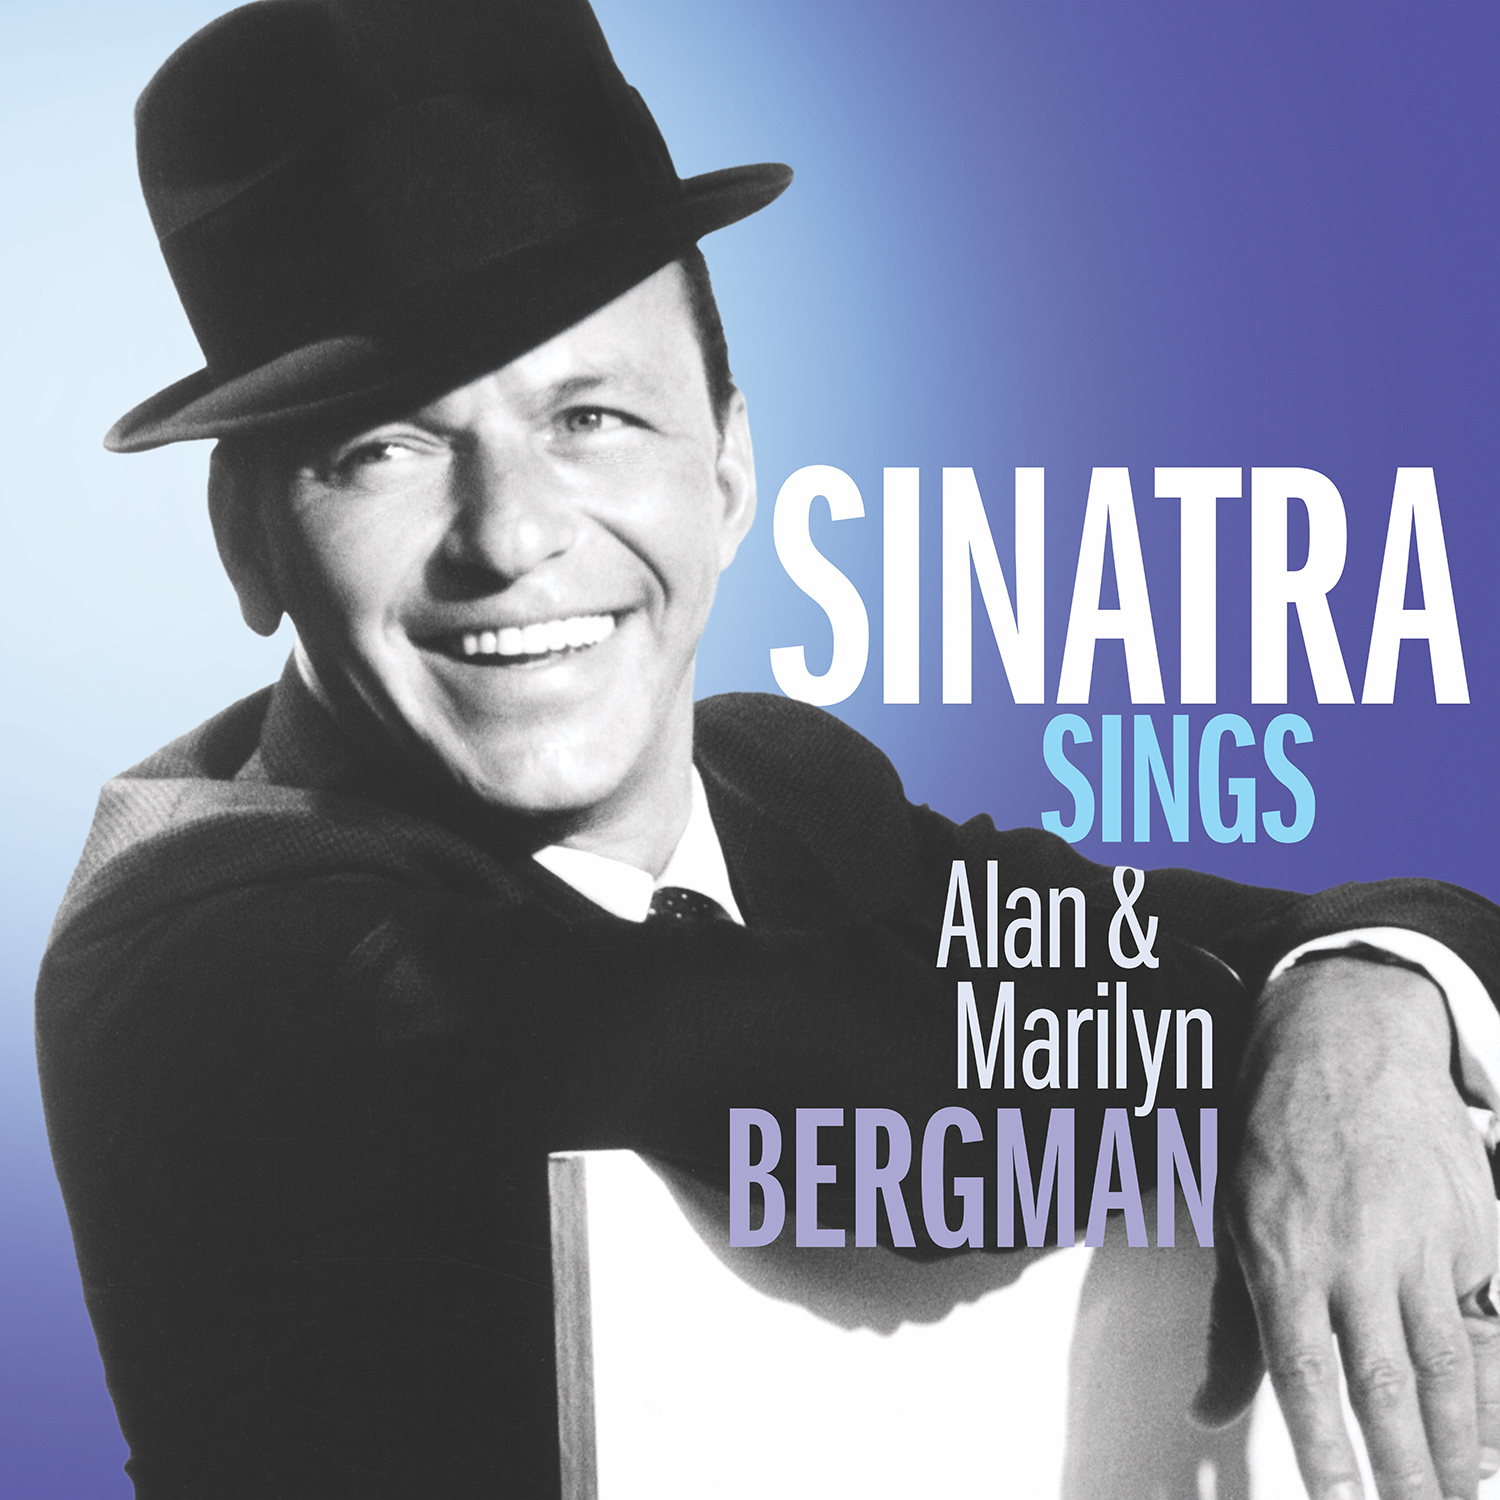 Frank Sinatra - Sinatra Sings Alan & Marilyn Bergman: Vinyl LP